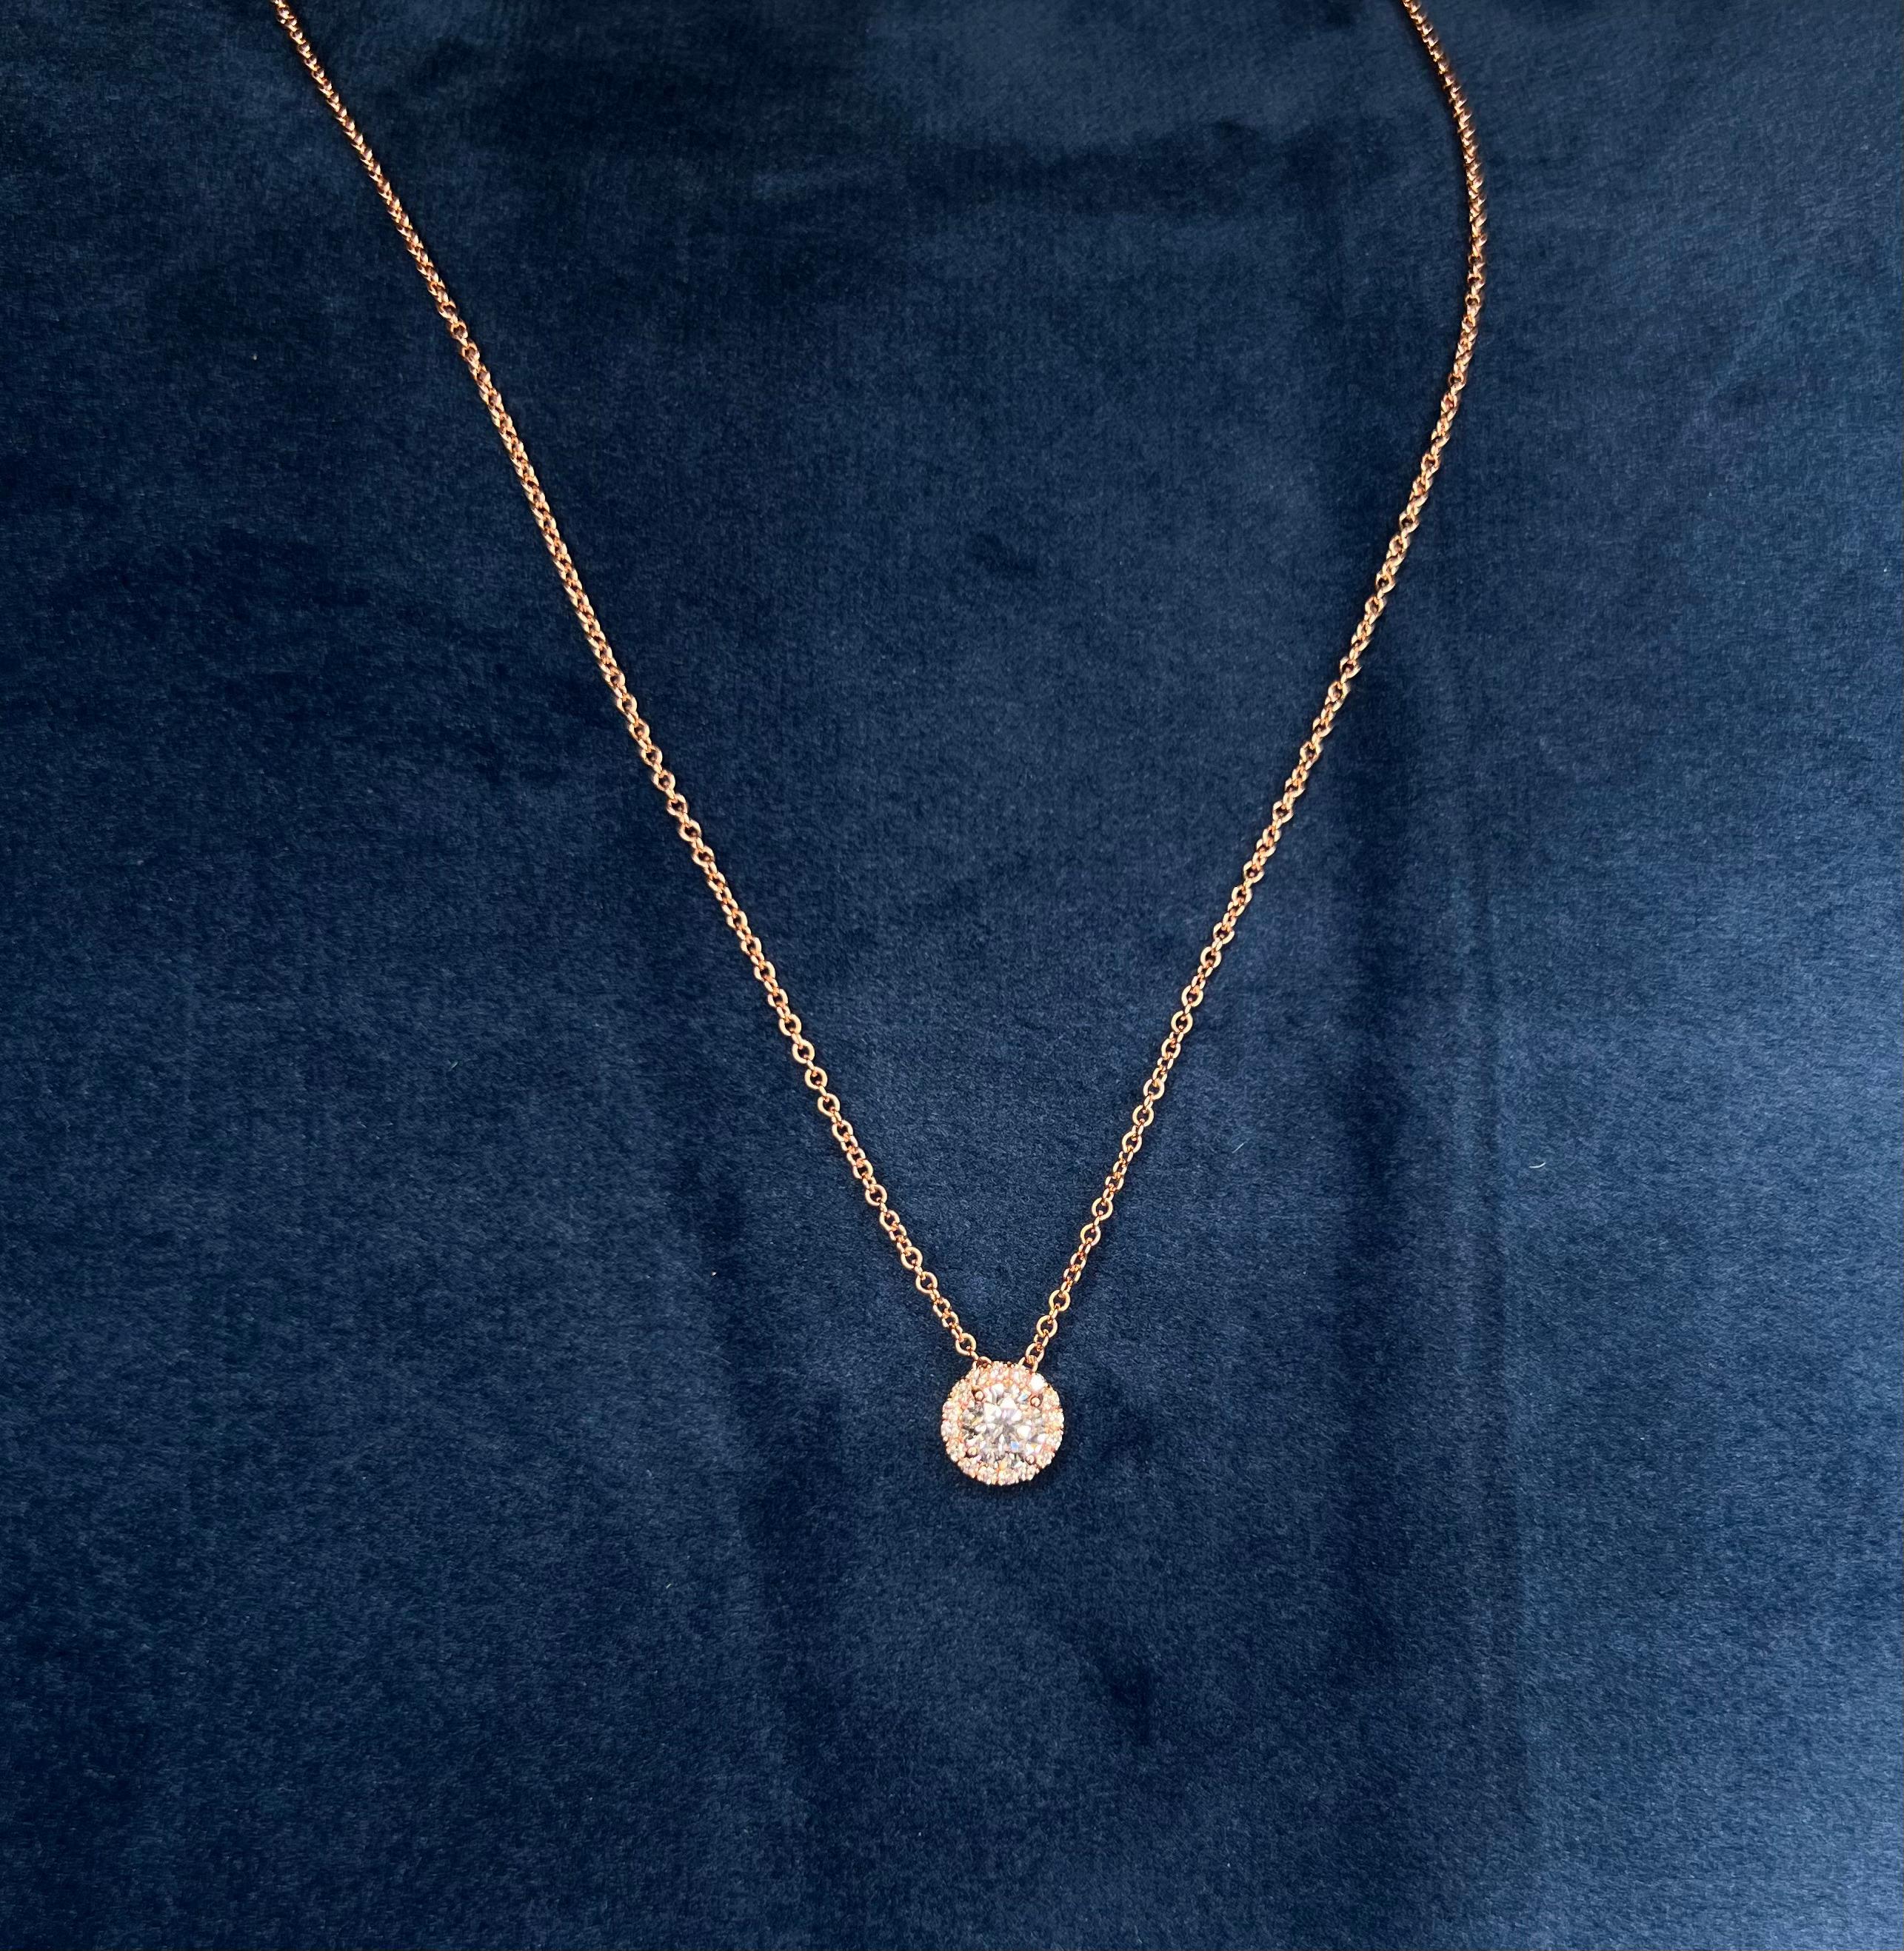 20 inch diamond necklace